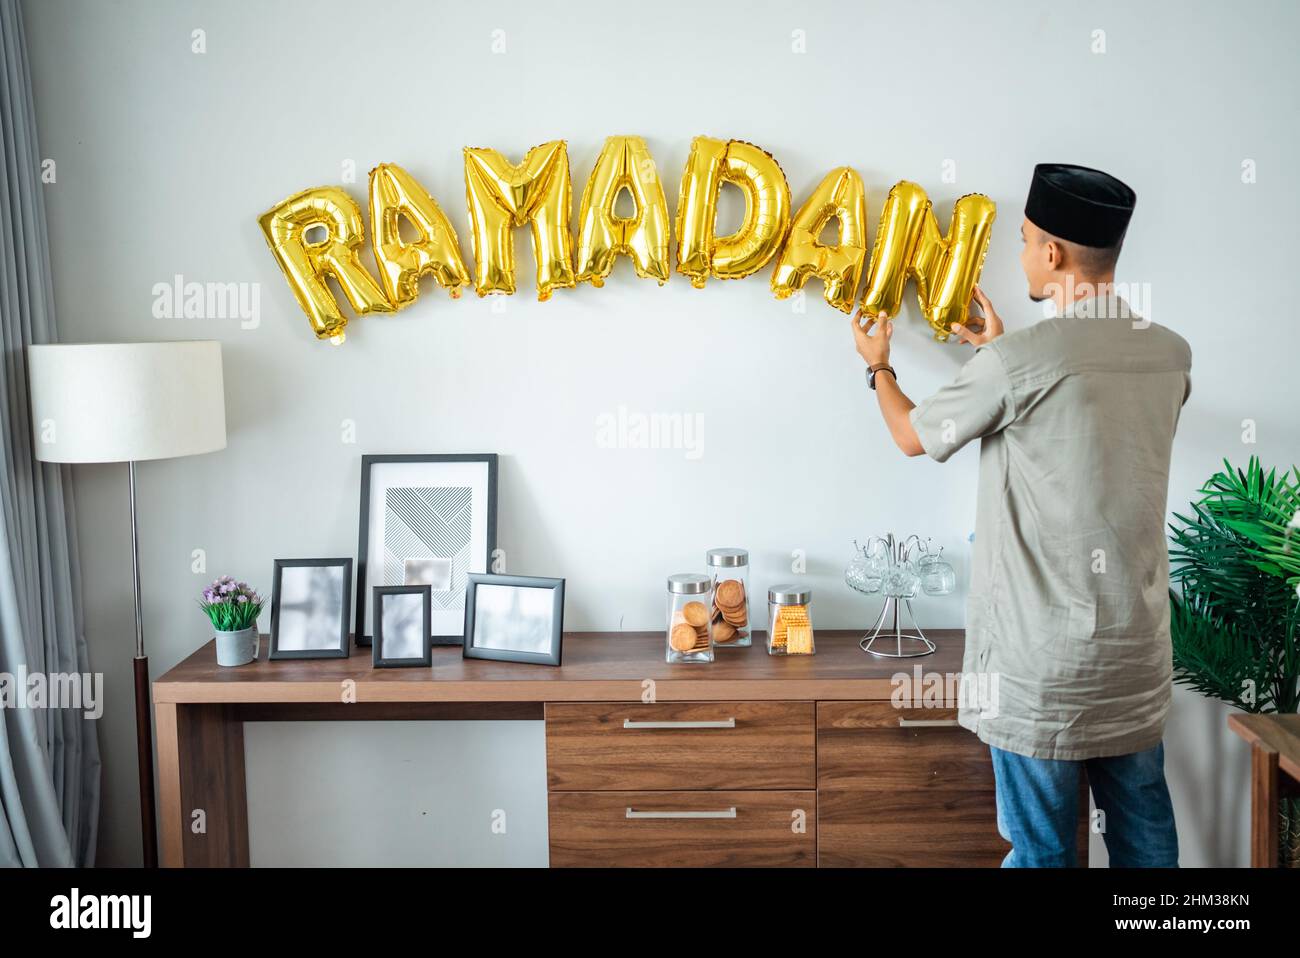 muslim male decorating the wall with ramadan balloon text Stock Photo